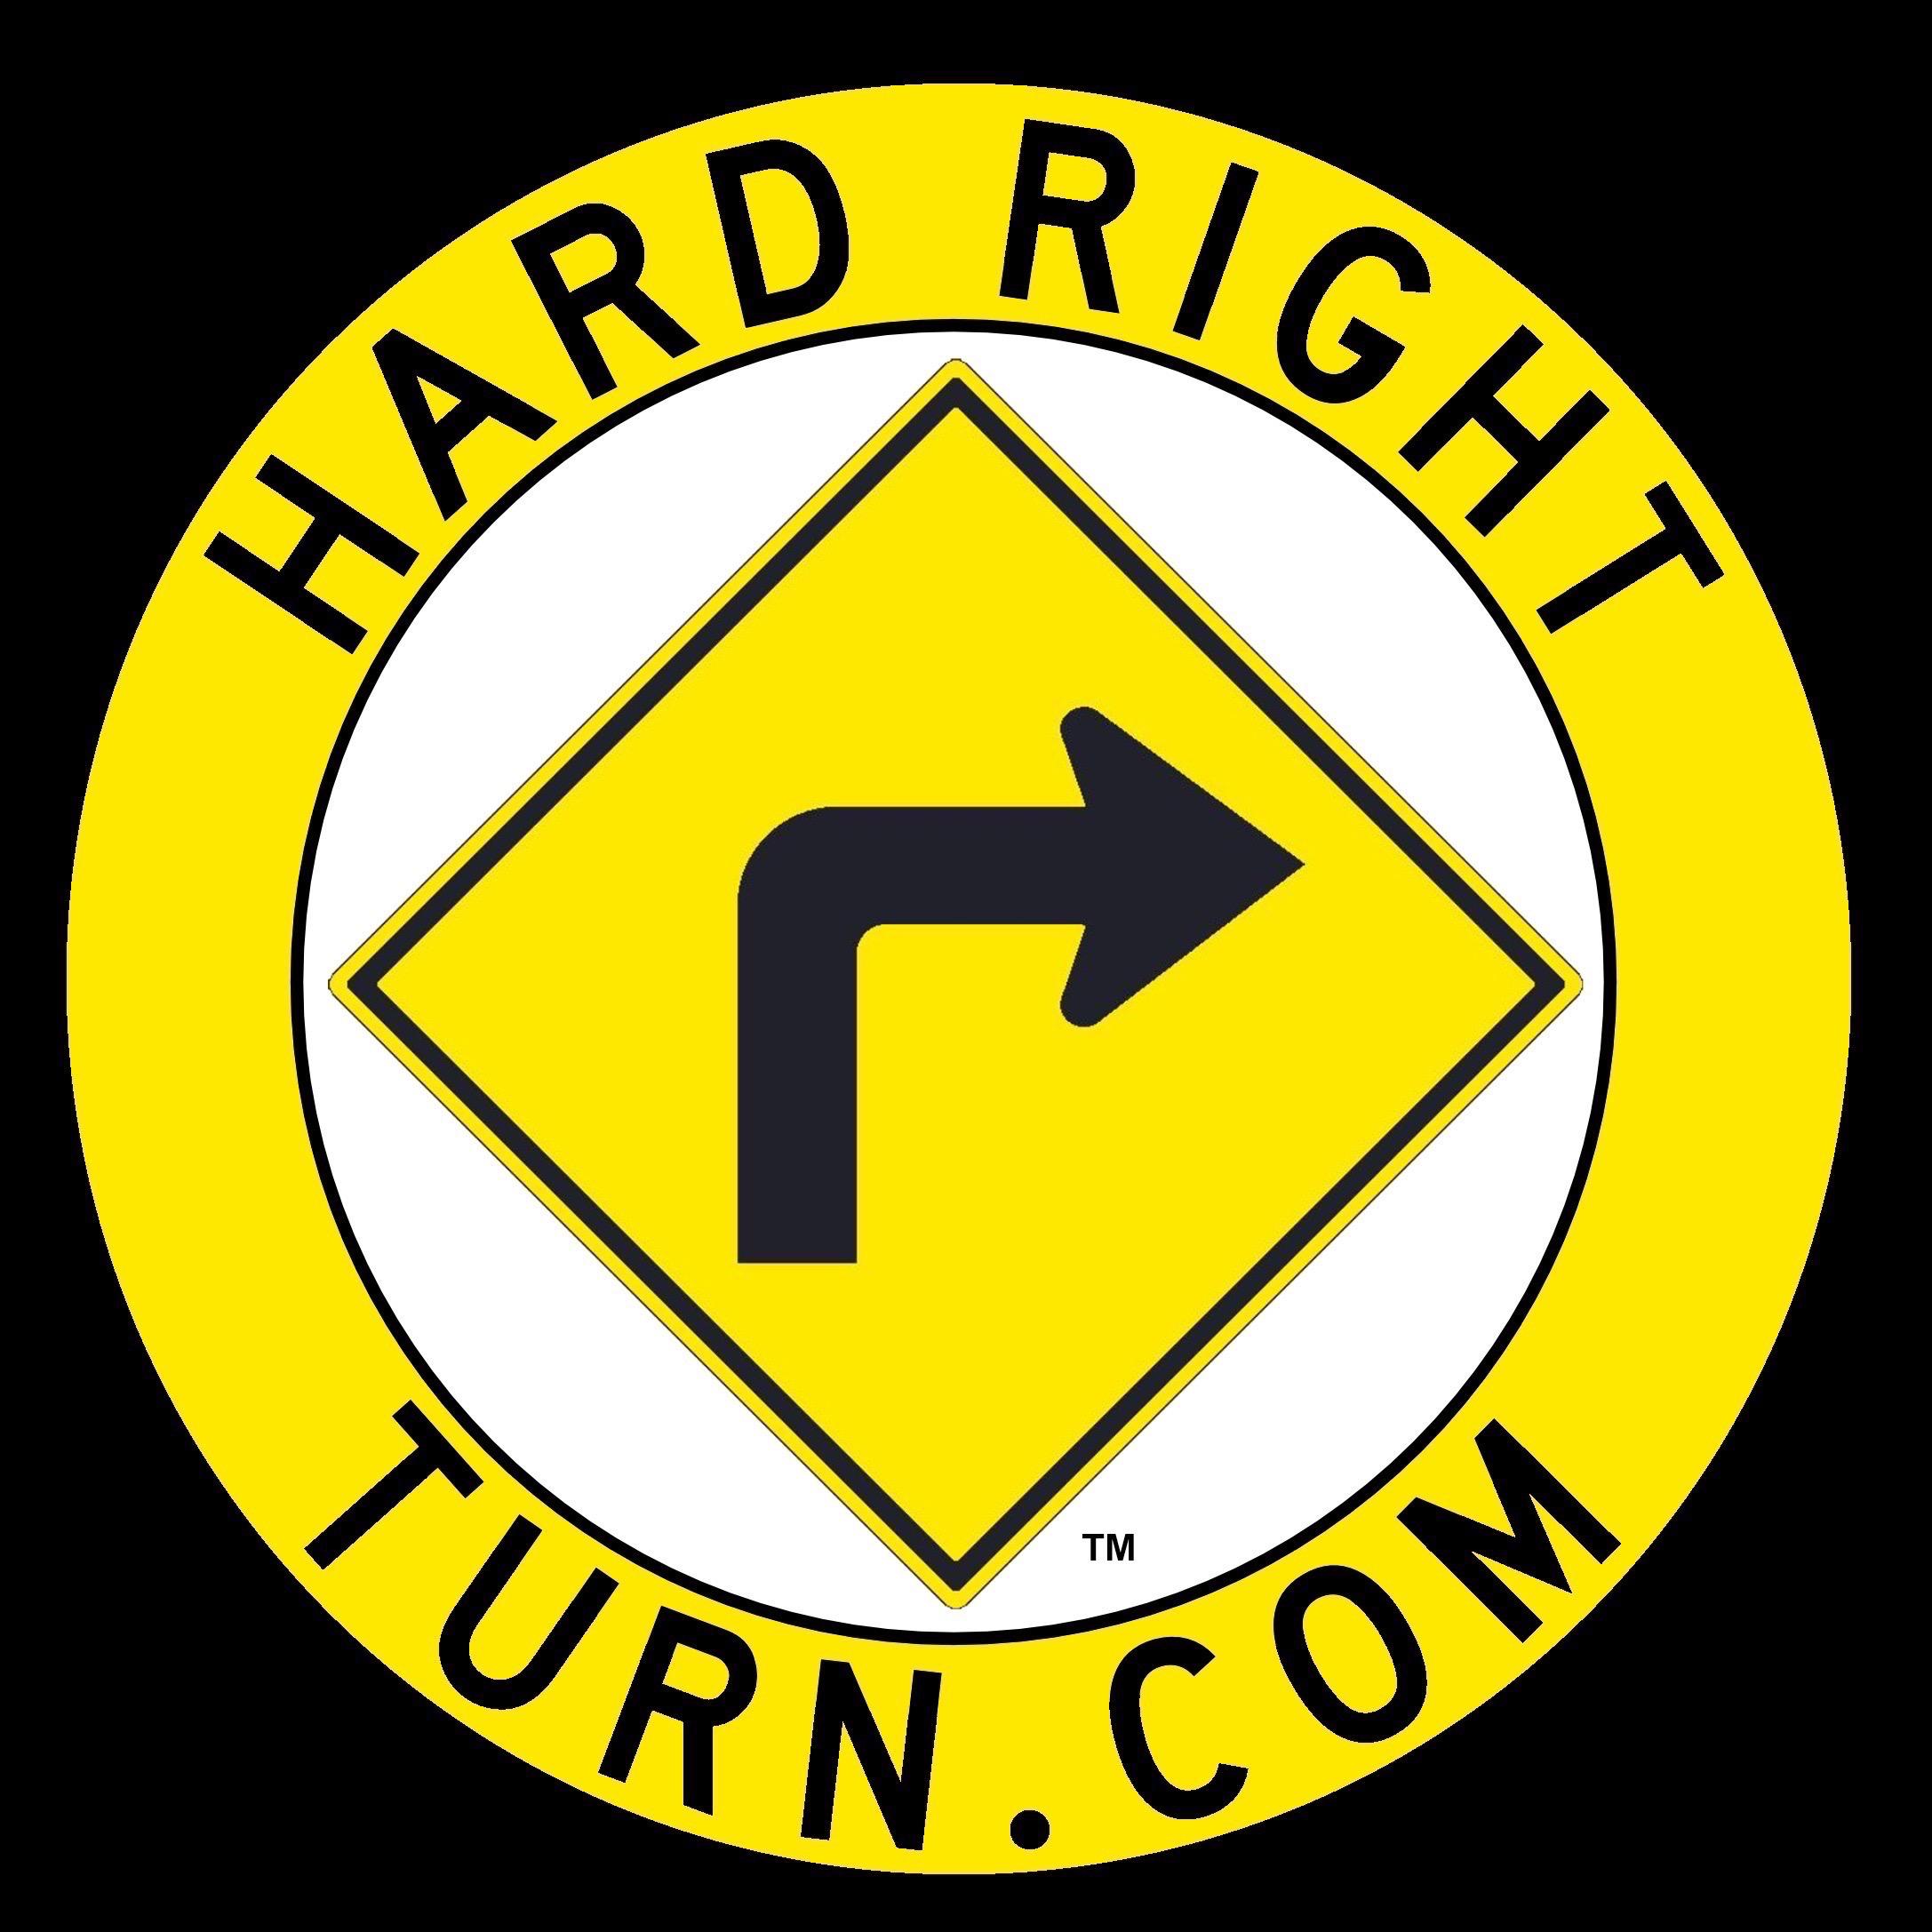 Hard Right Turn